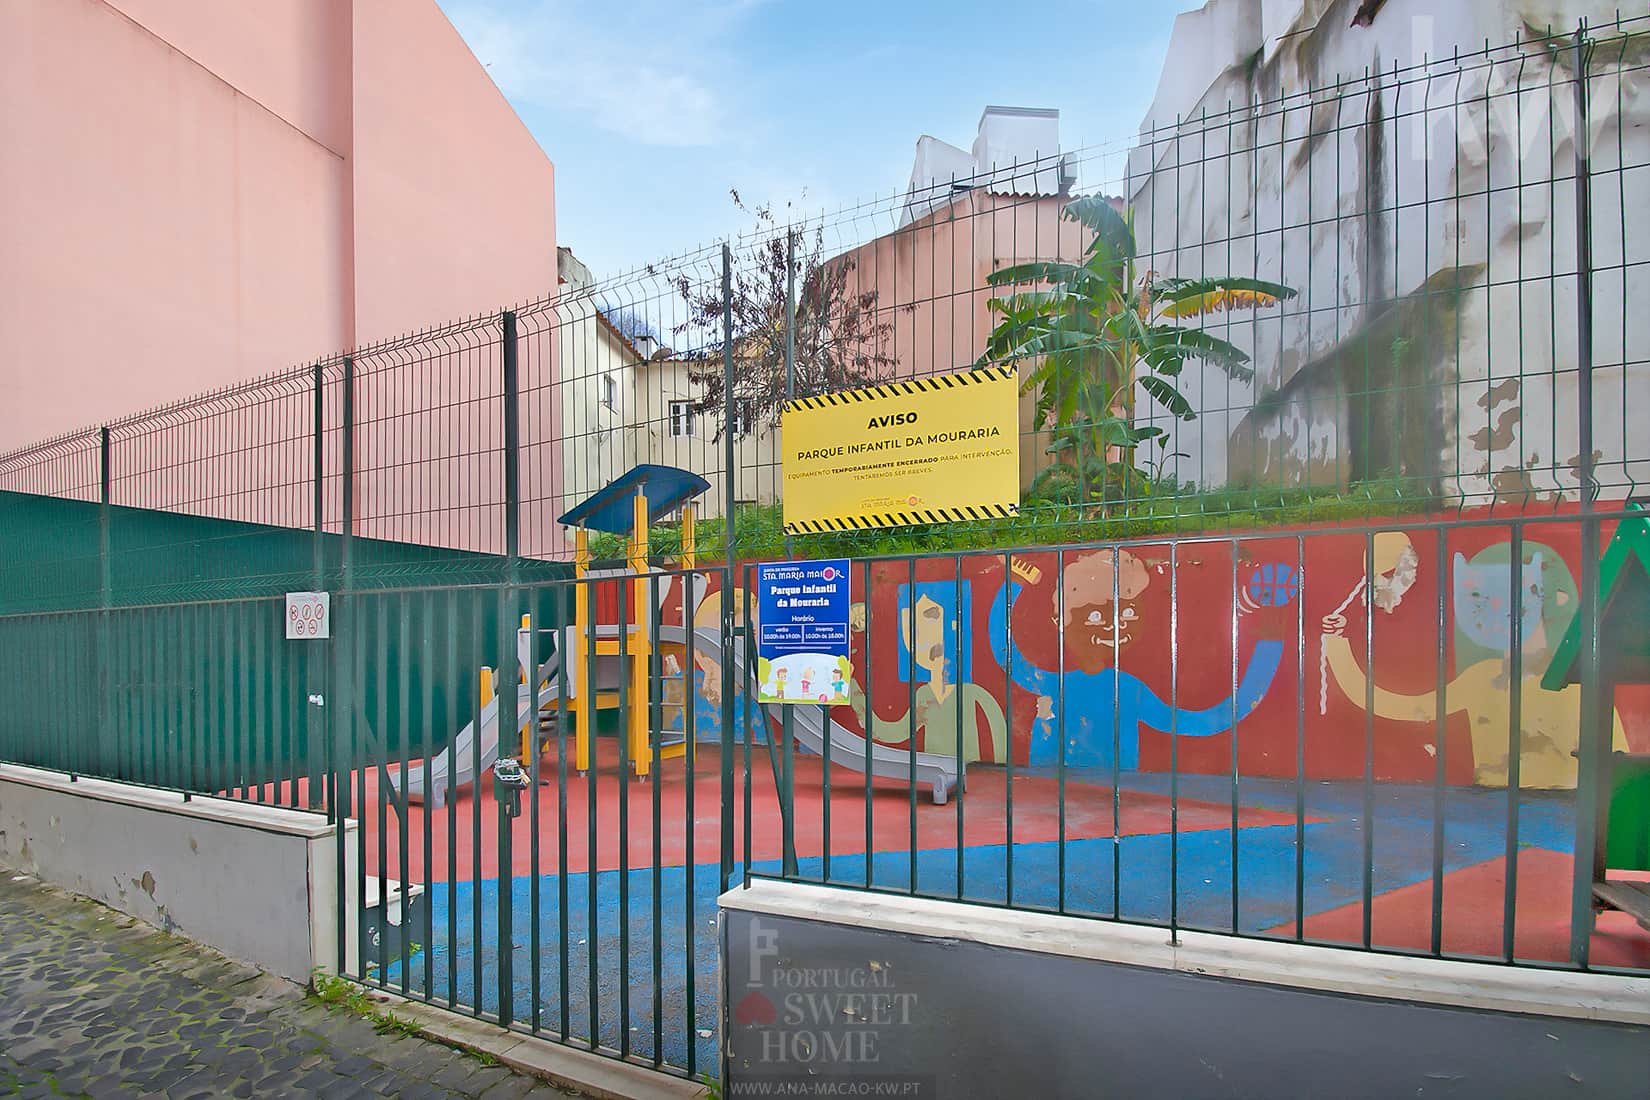 Children's playground in the area